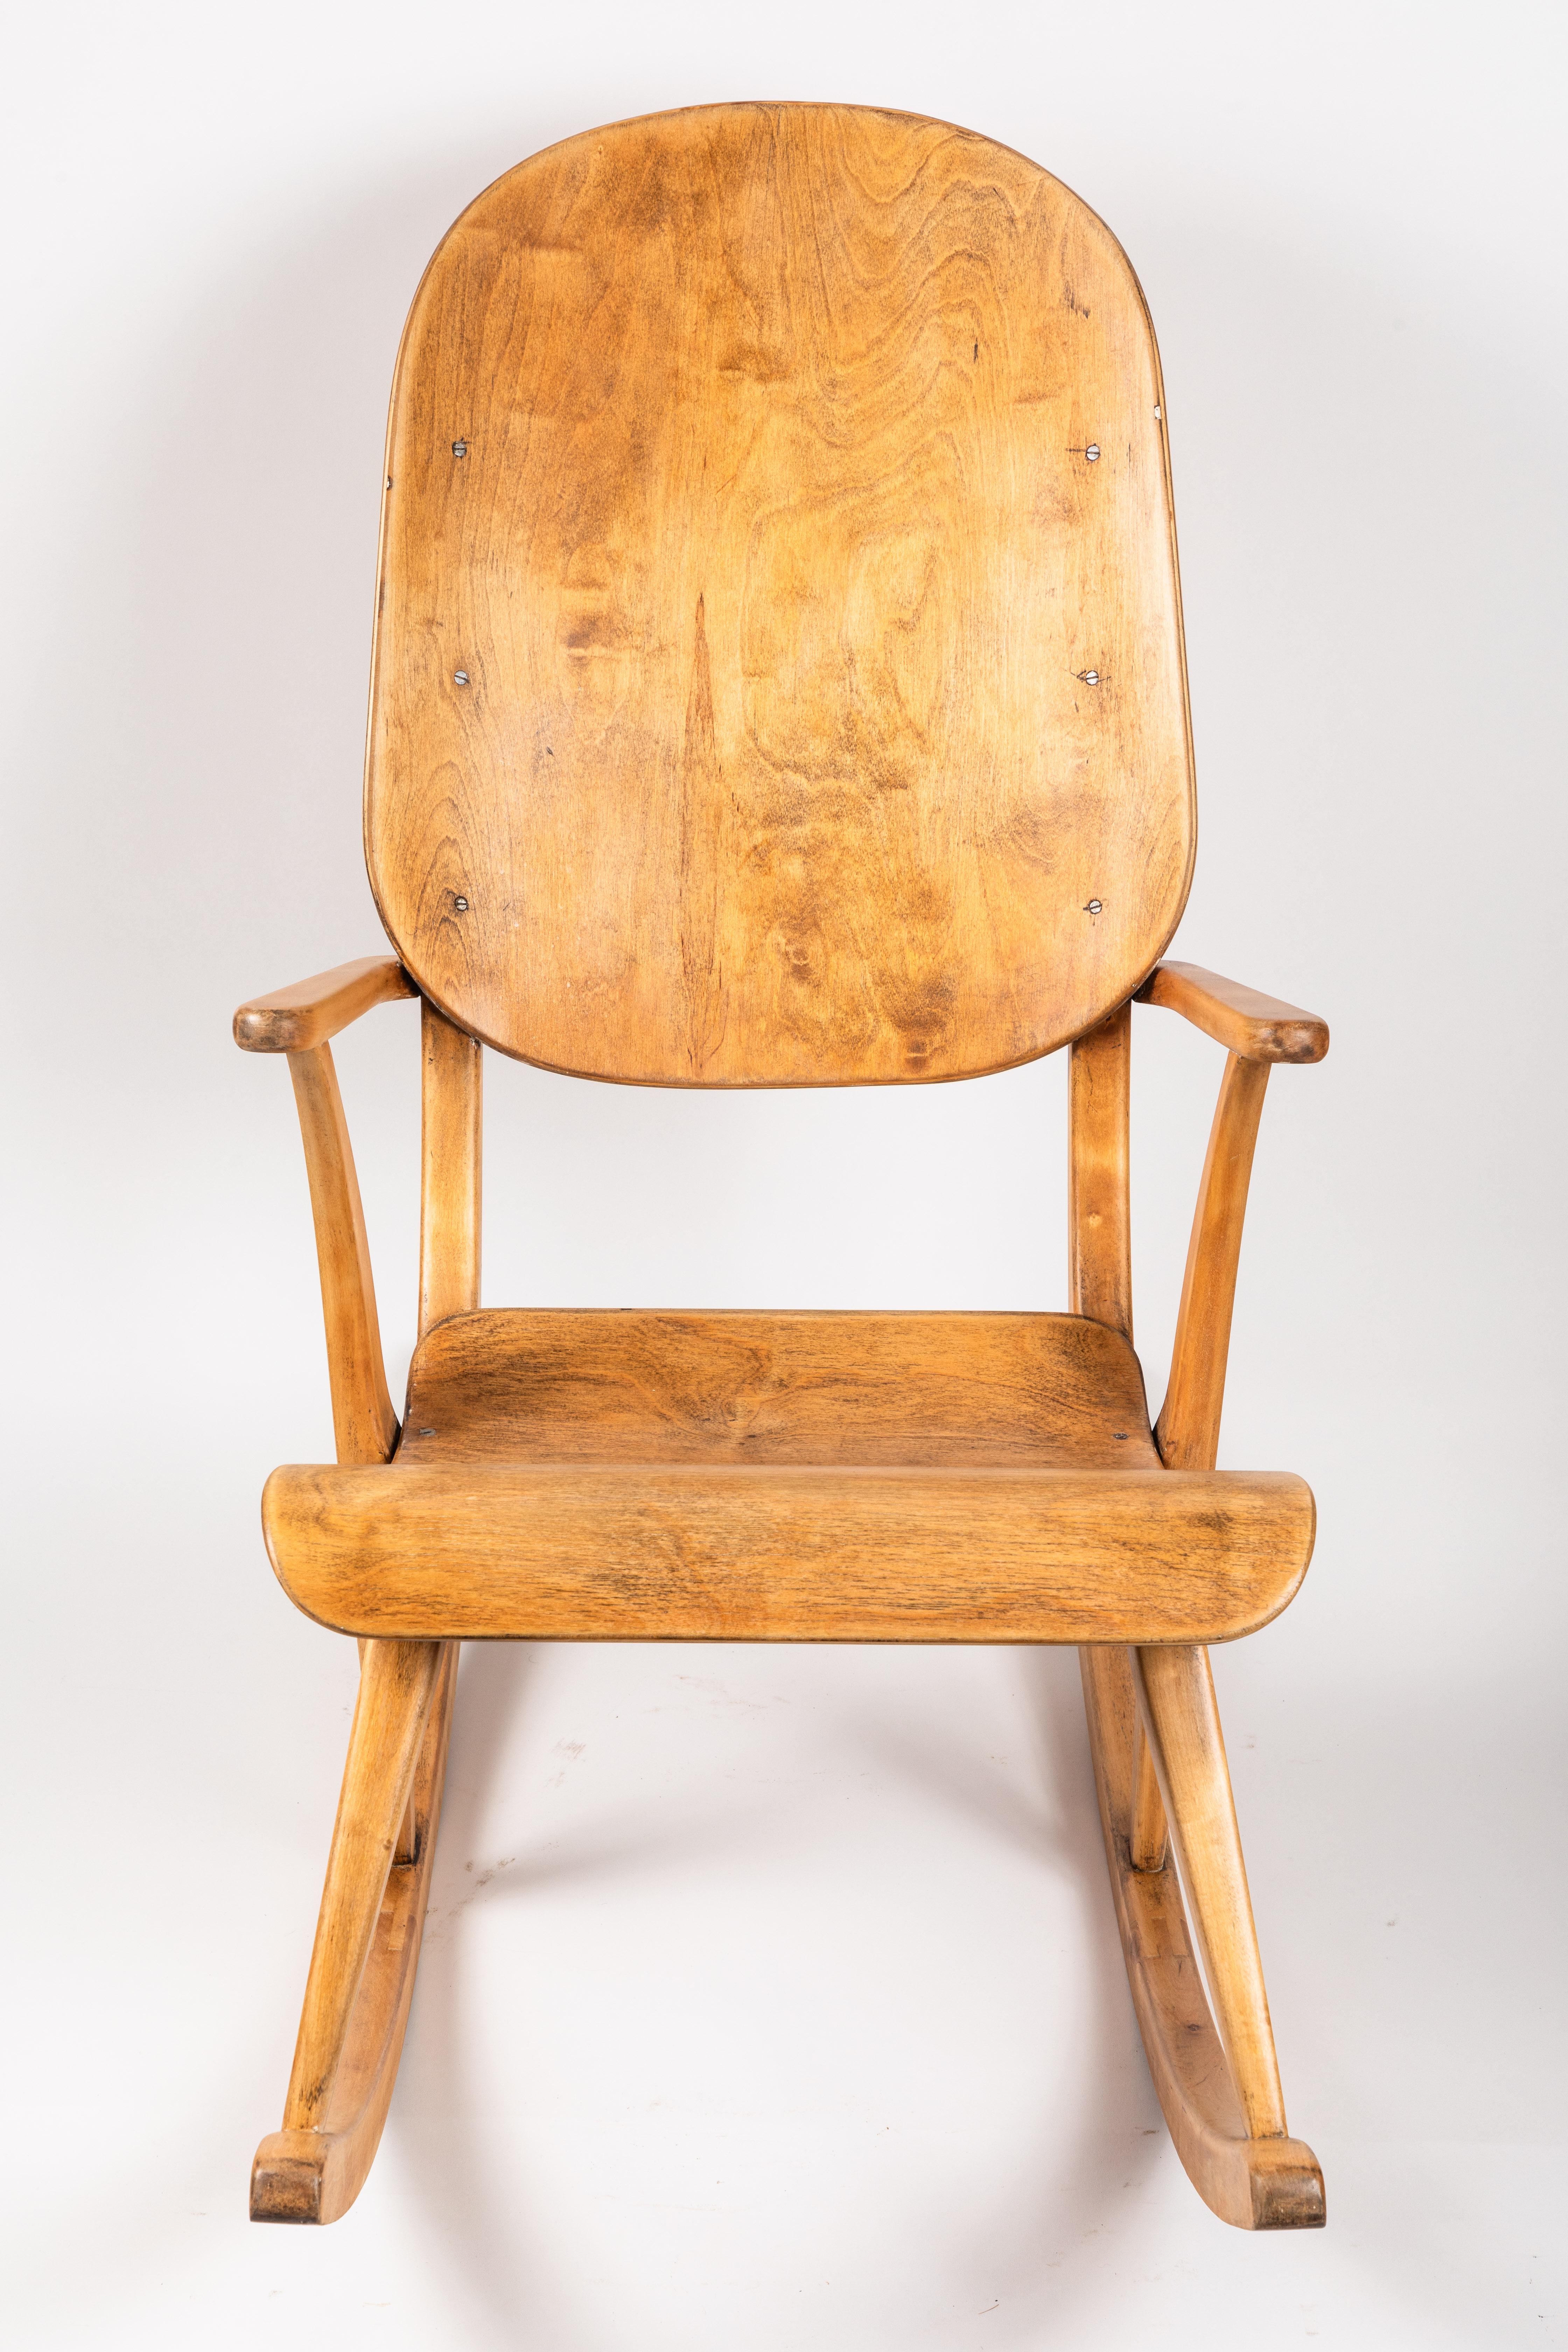 1940 rocking chair